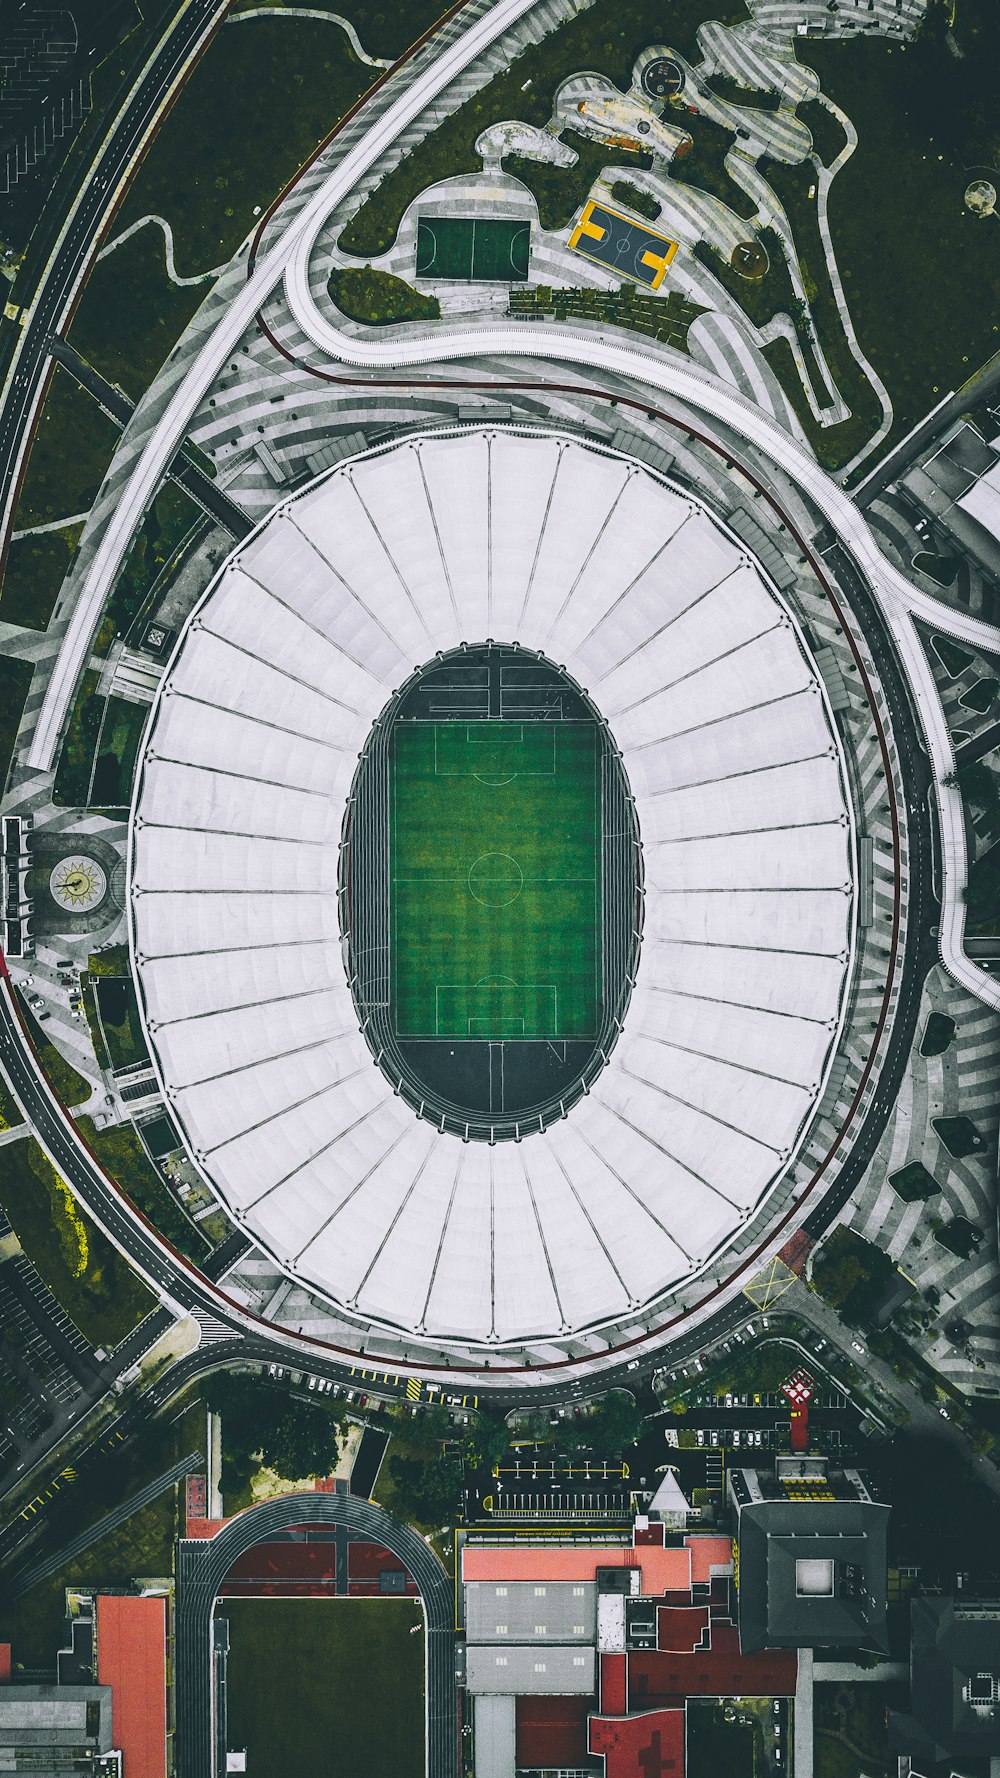 aerial photo of football field